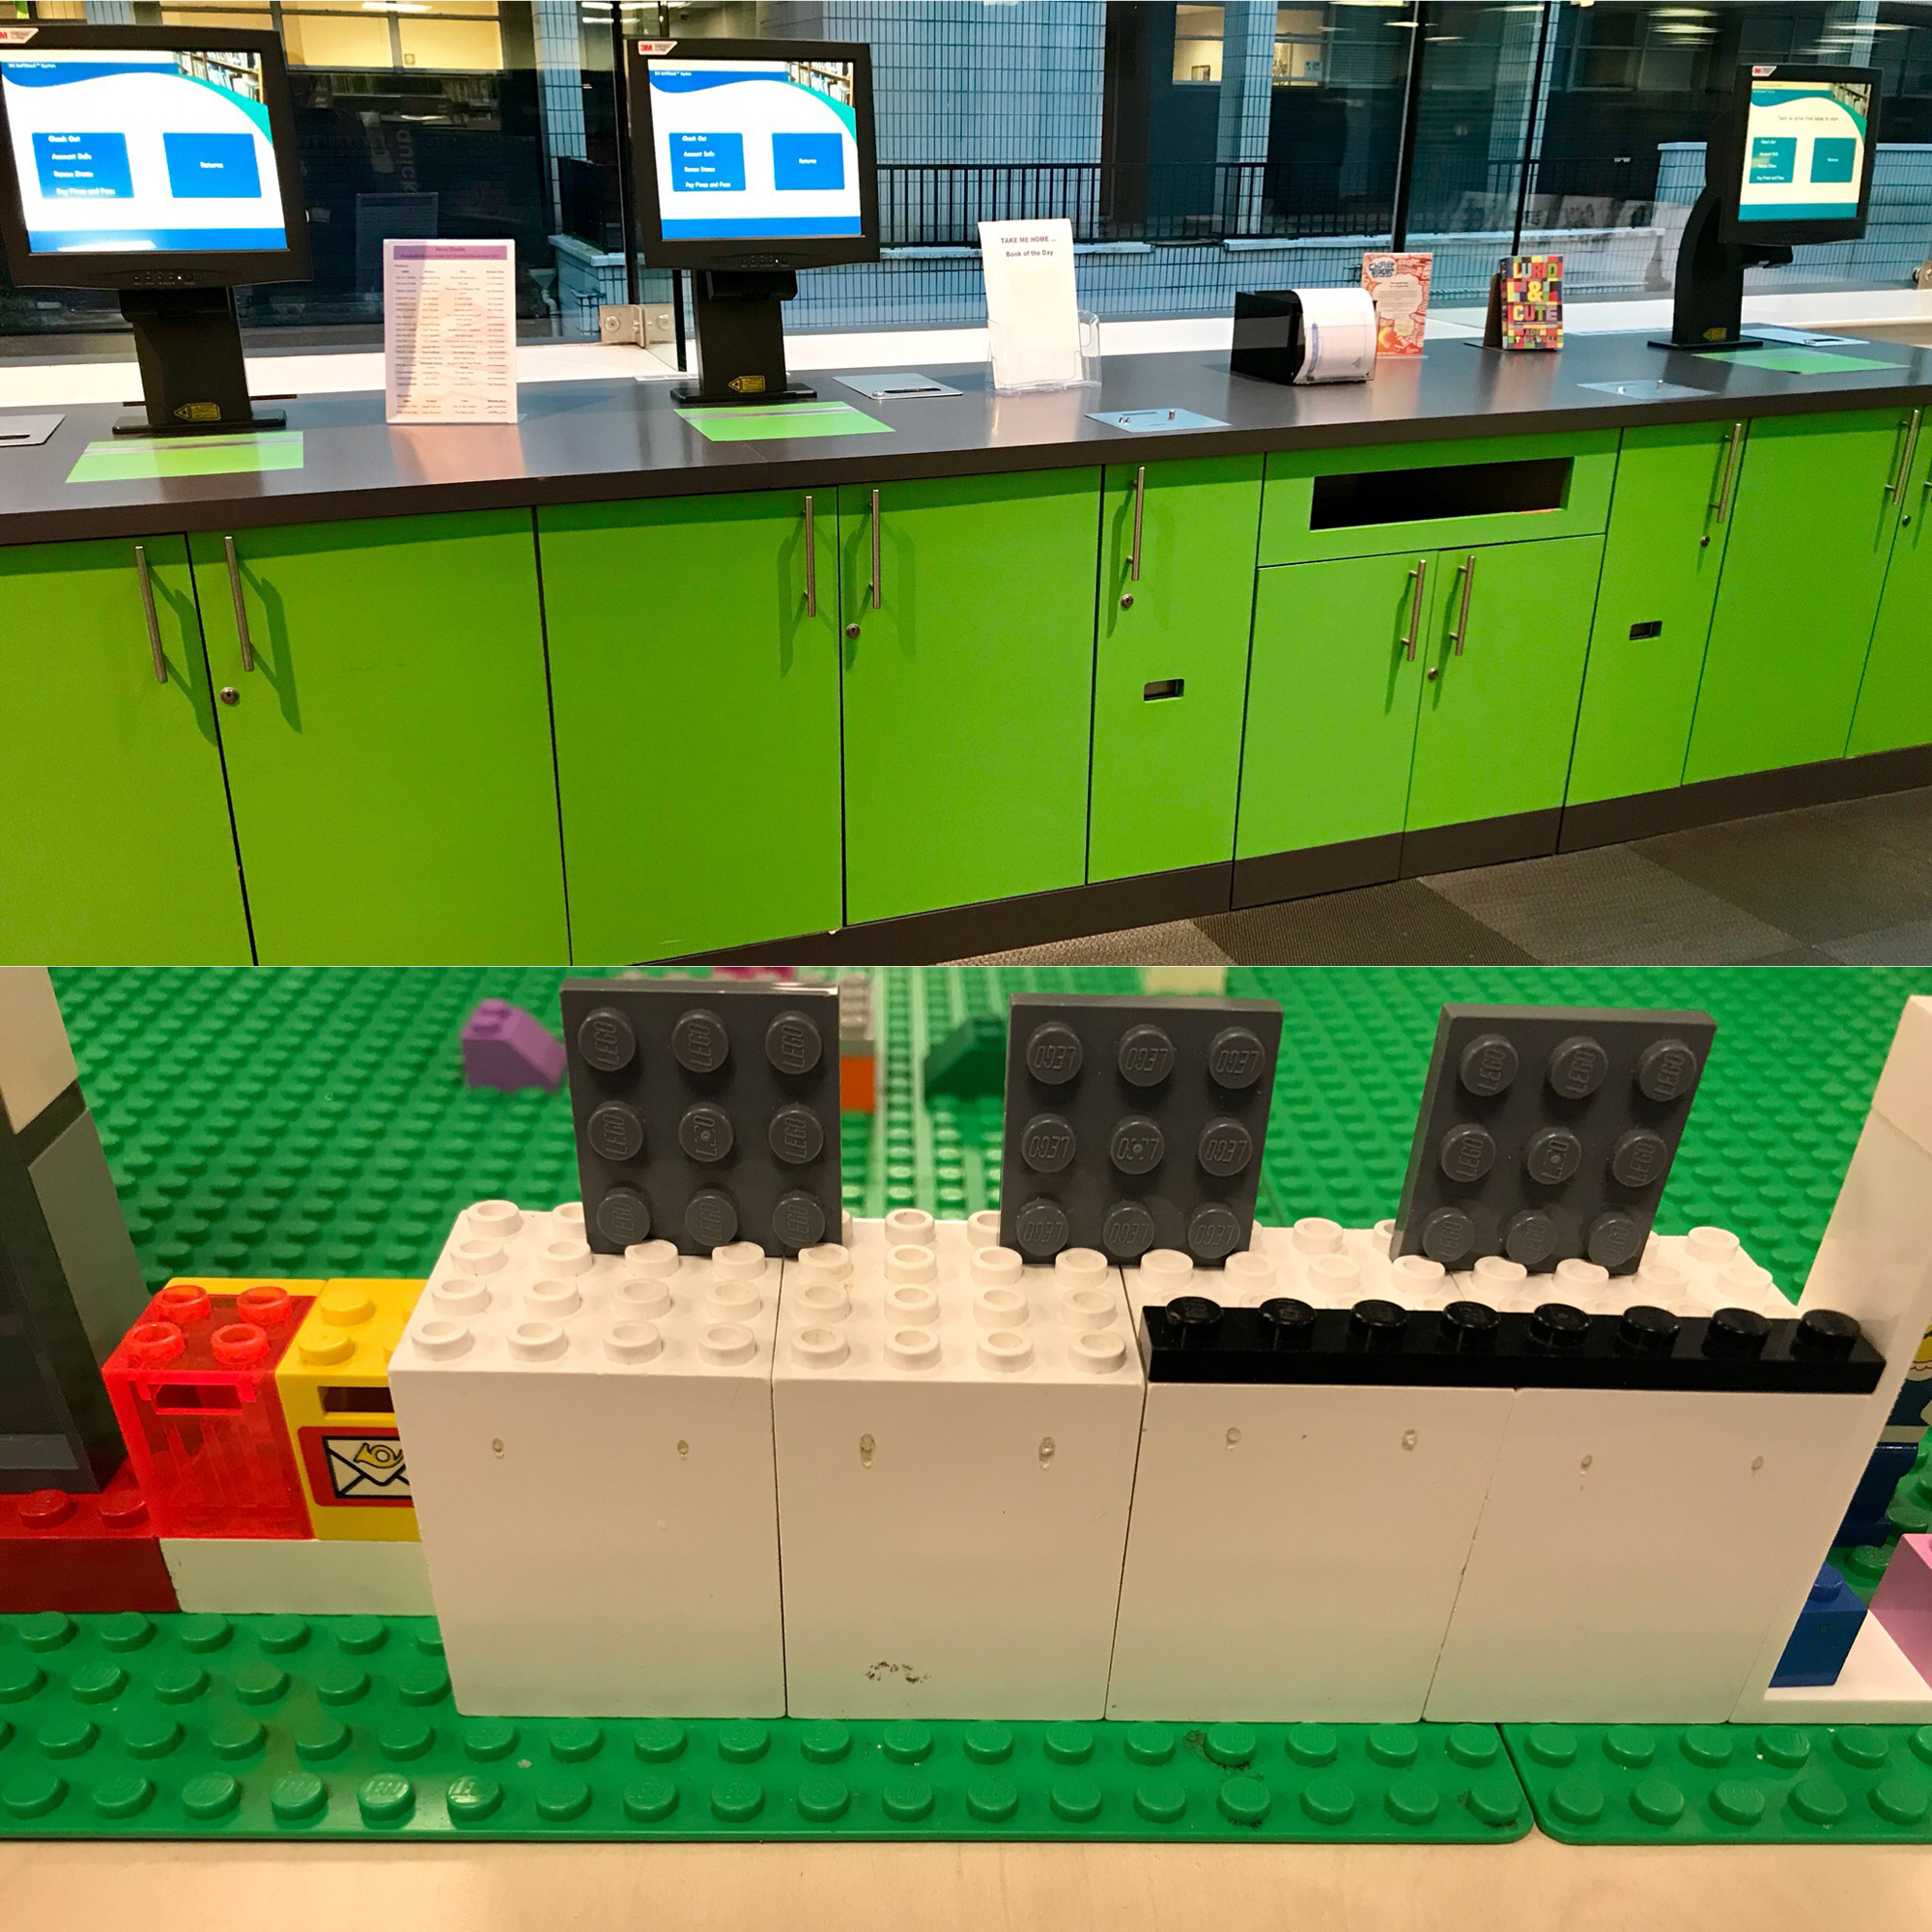 The Lego replica of the self service machines at Halton Lea library (Halton Libraries)